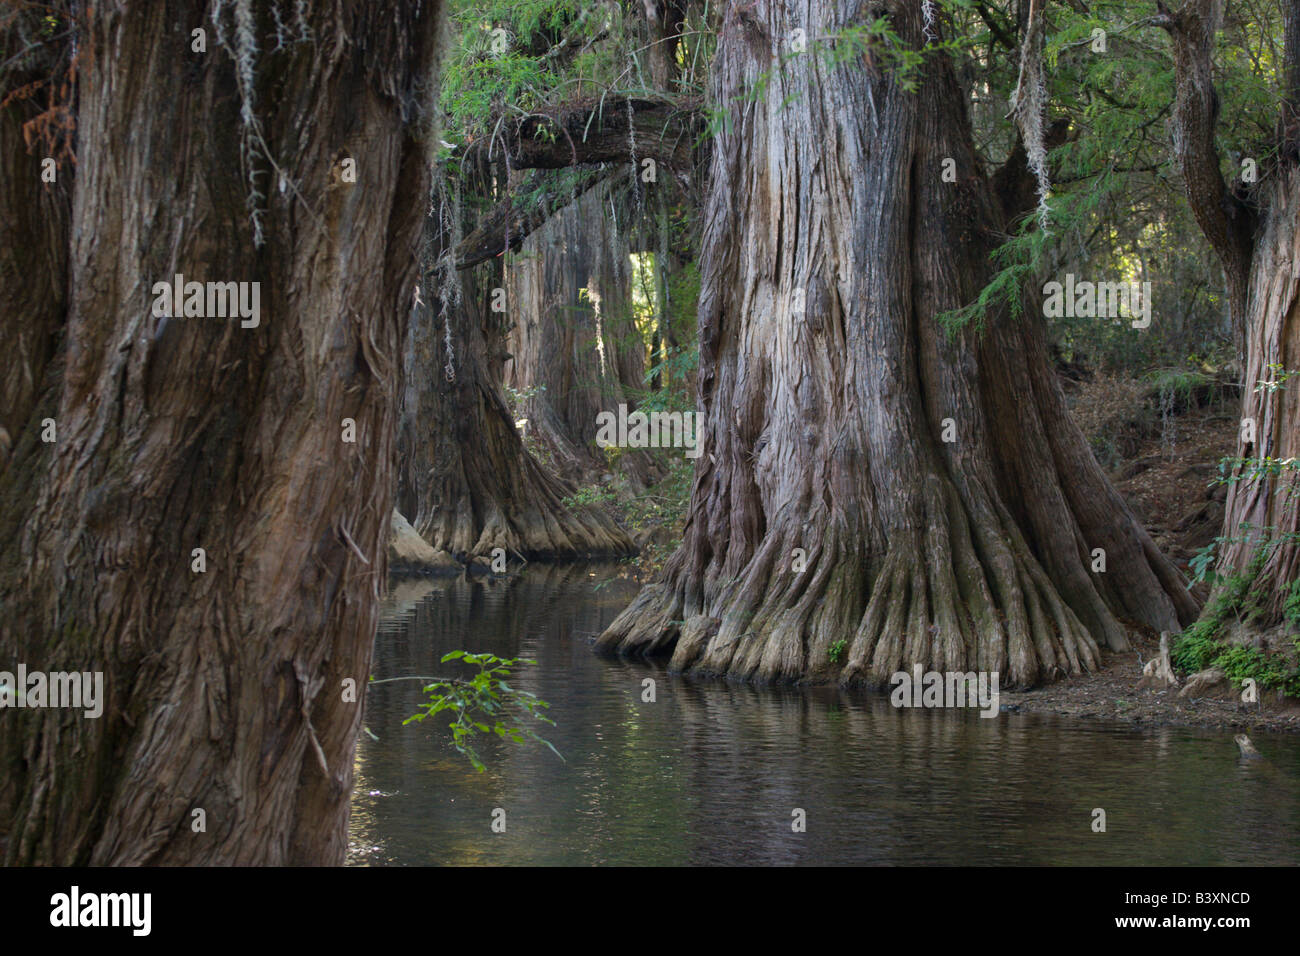 Pantano swamp tree Mexique Banque D'Images